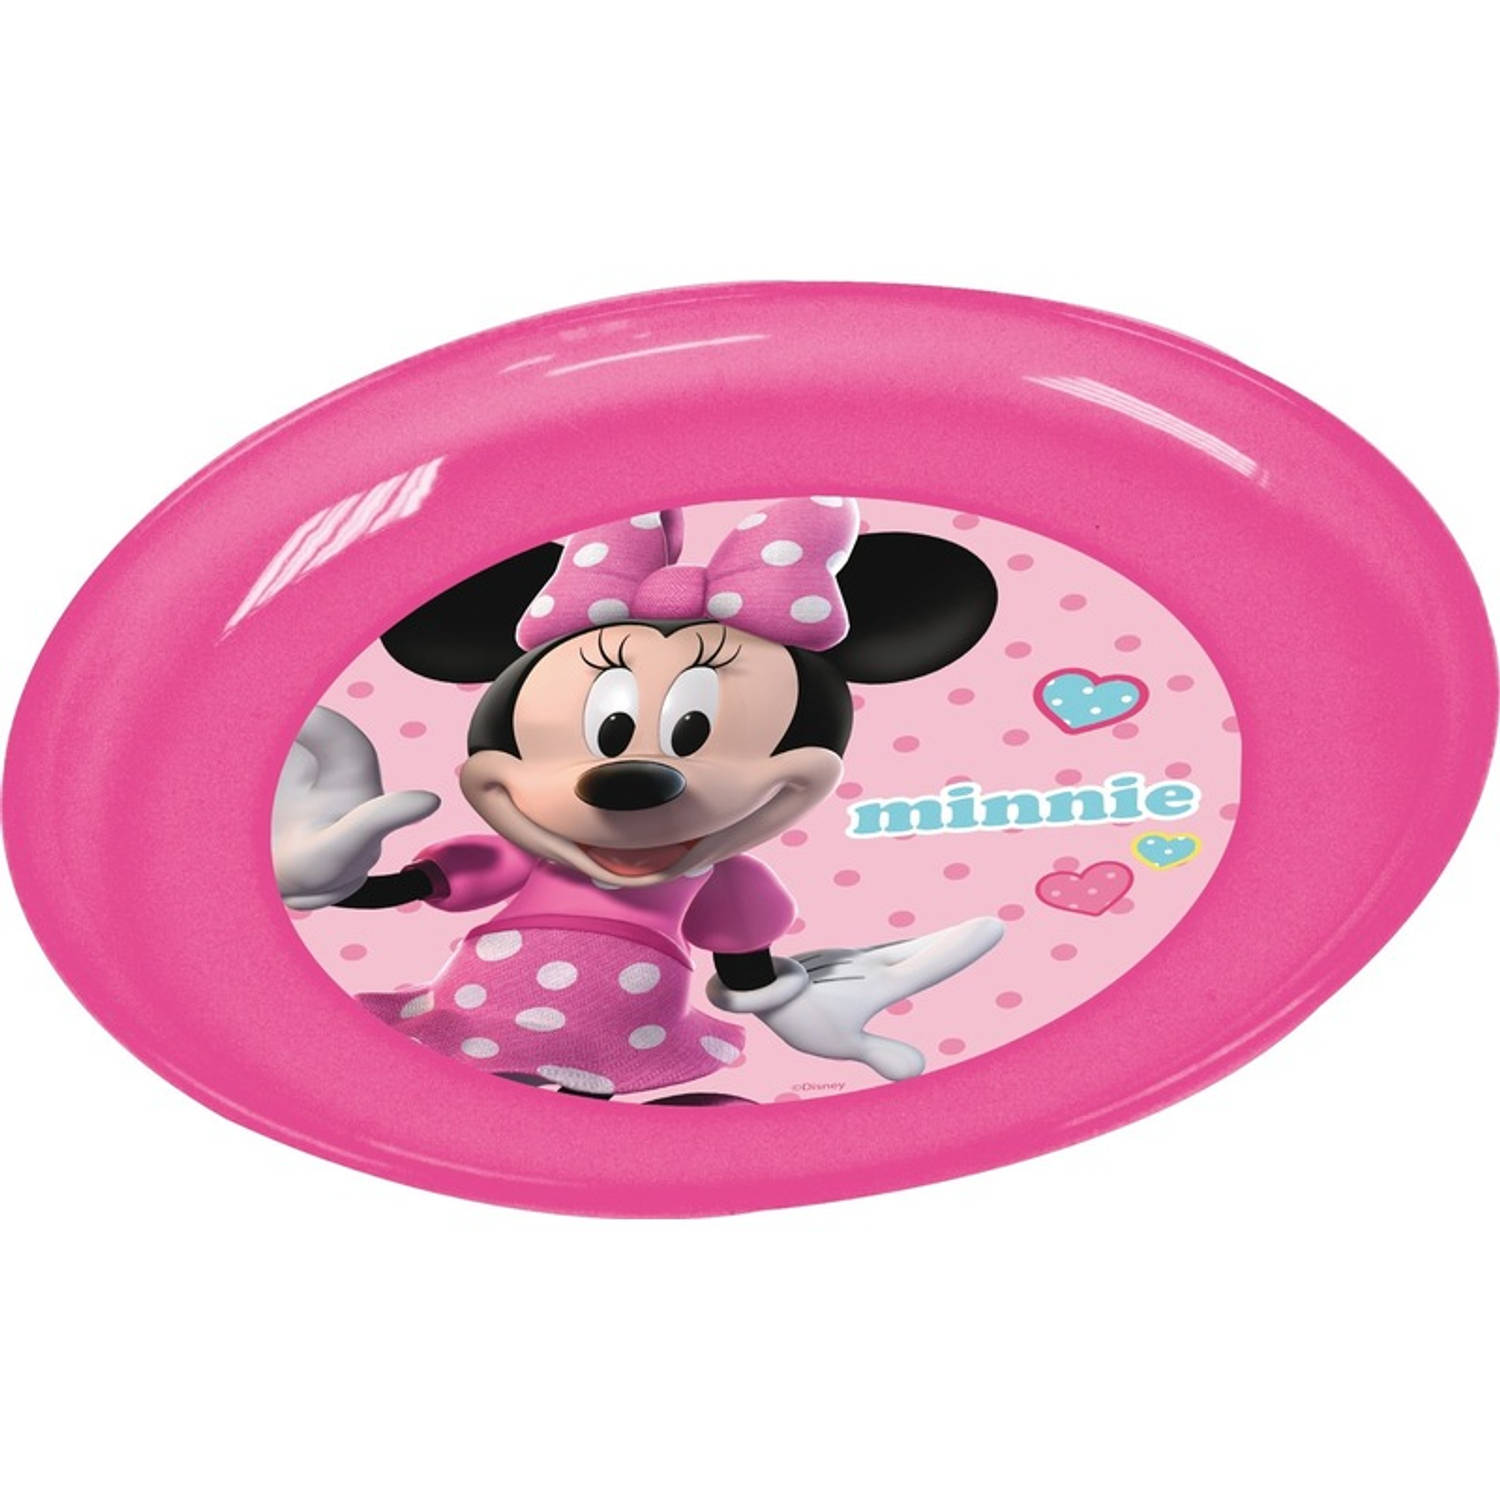 Lyrisch Toestand vacature 4x Plastic Disney Minnie Mouse bordjes | Blokker